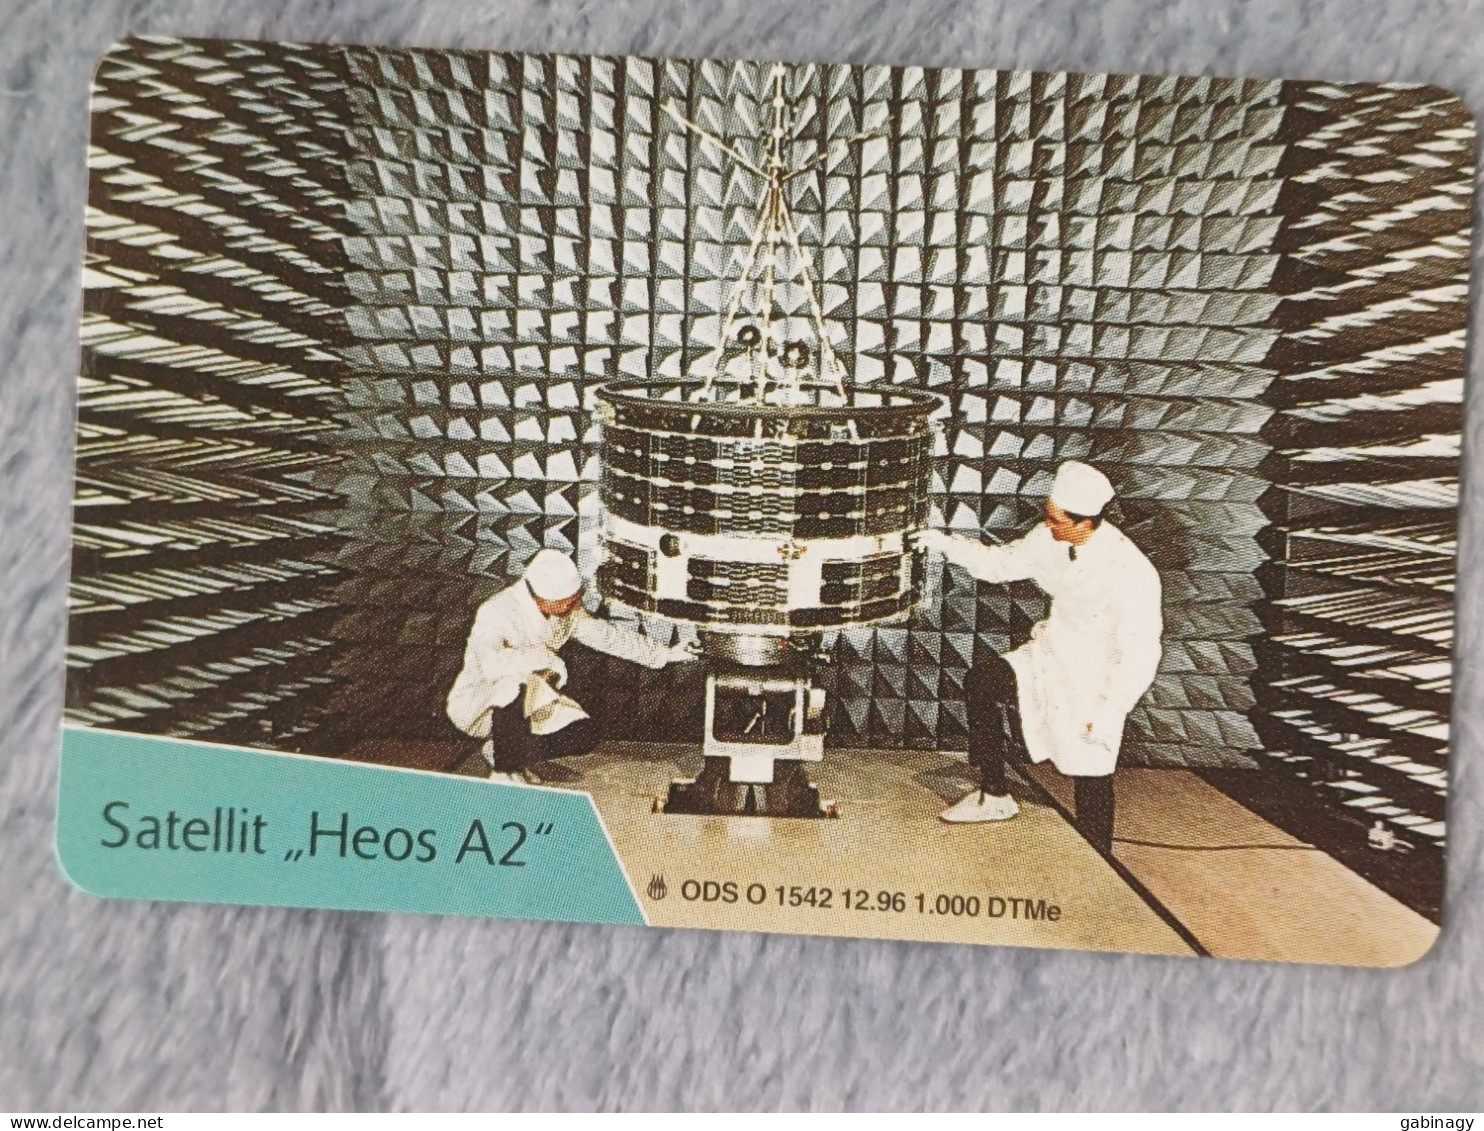 GERMANY-1080 - O 1542 - Eroberung Des Weltraums: Satellit "Heos A2" - SPACE - 1.000ex. - O-Serie : Serie Clienti Esclusi Dal Servizio Delle Collezioni